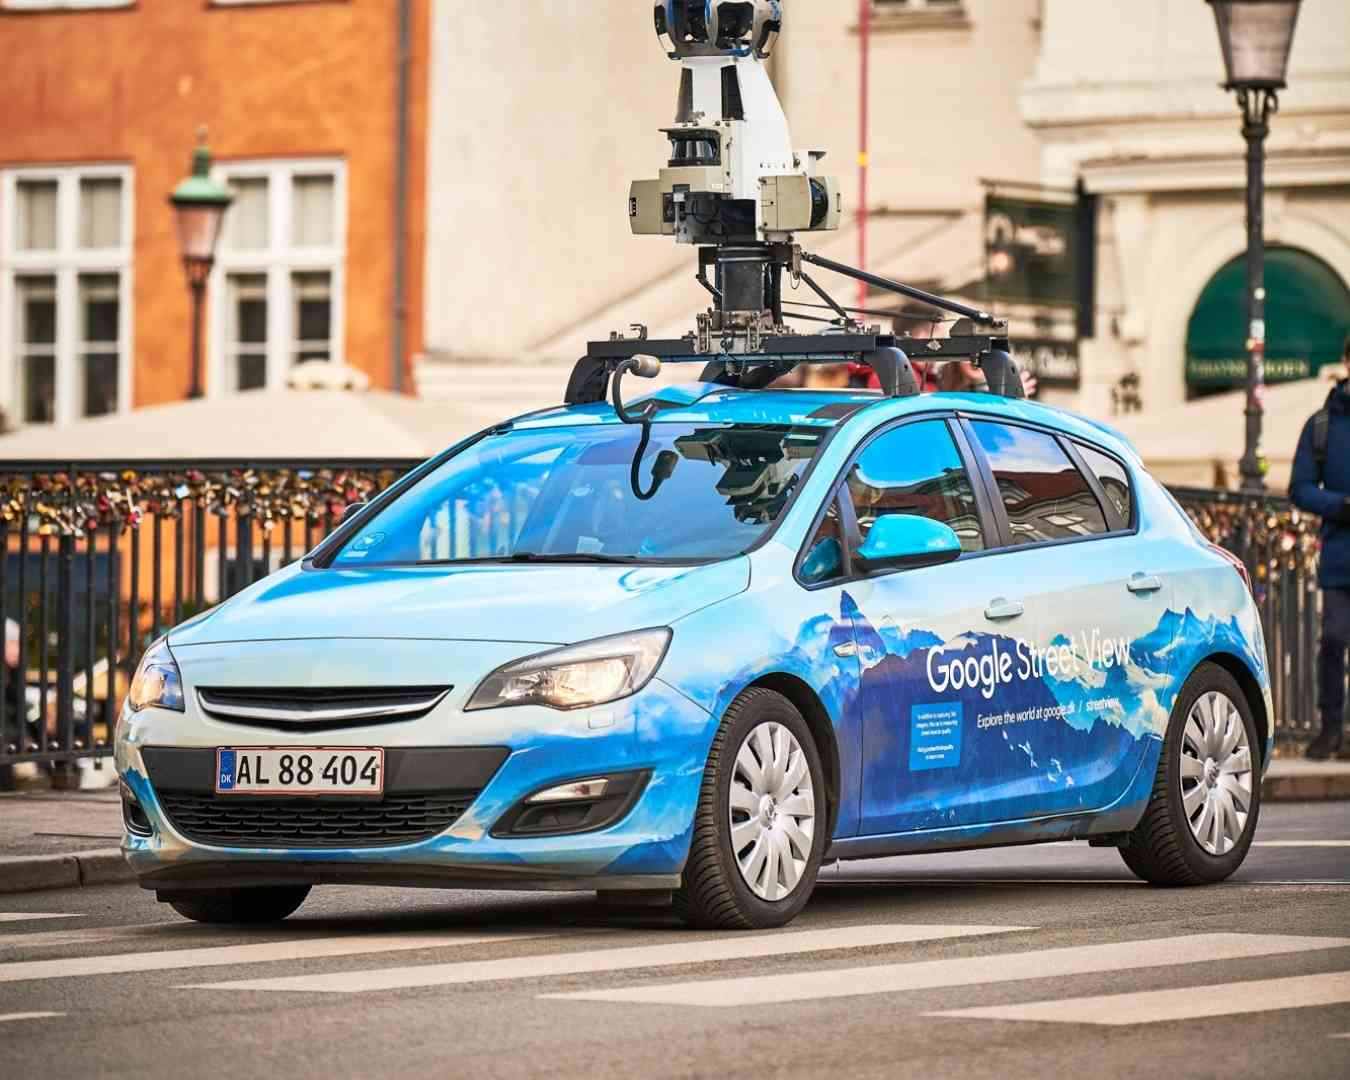 reklamefotograf-wecreate-Google-Street-car-promo